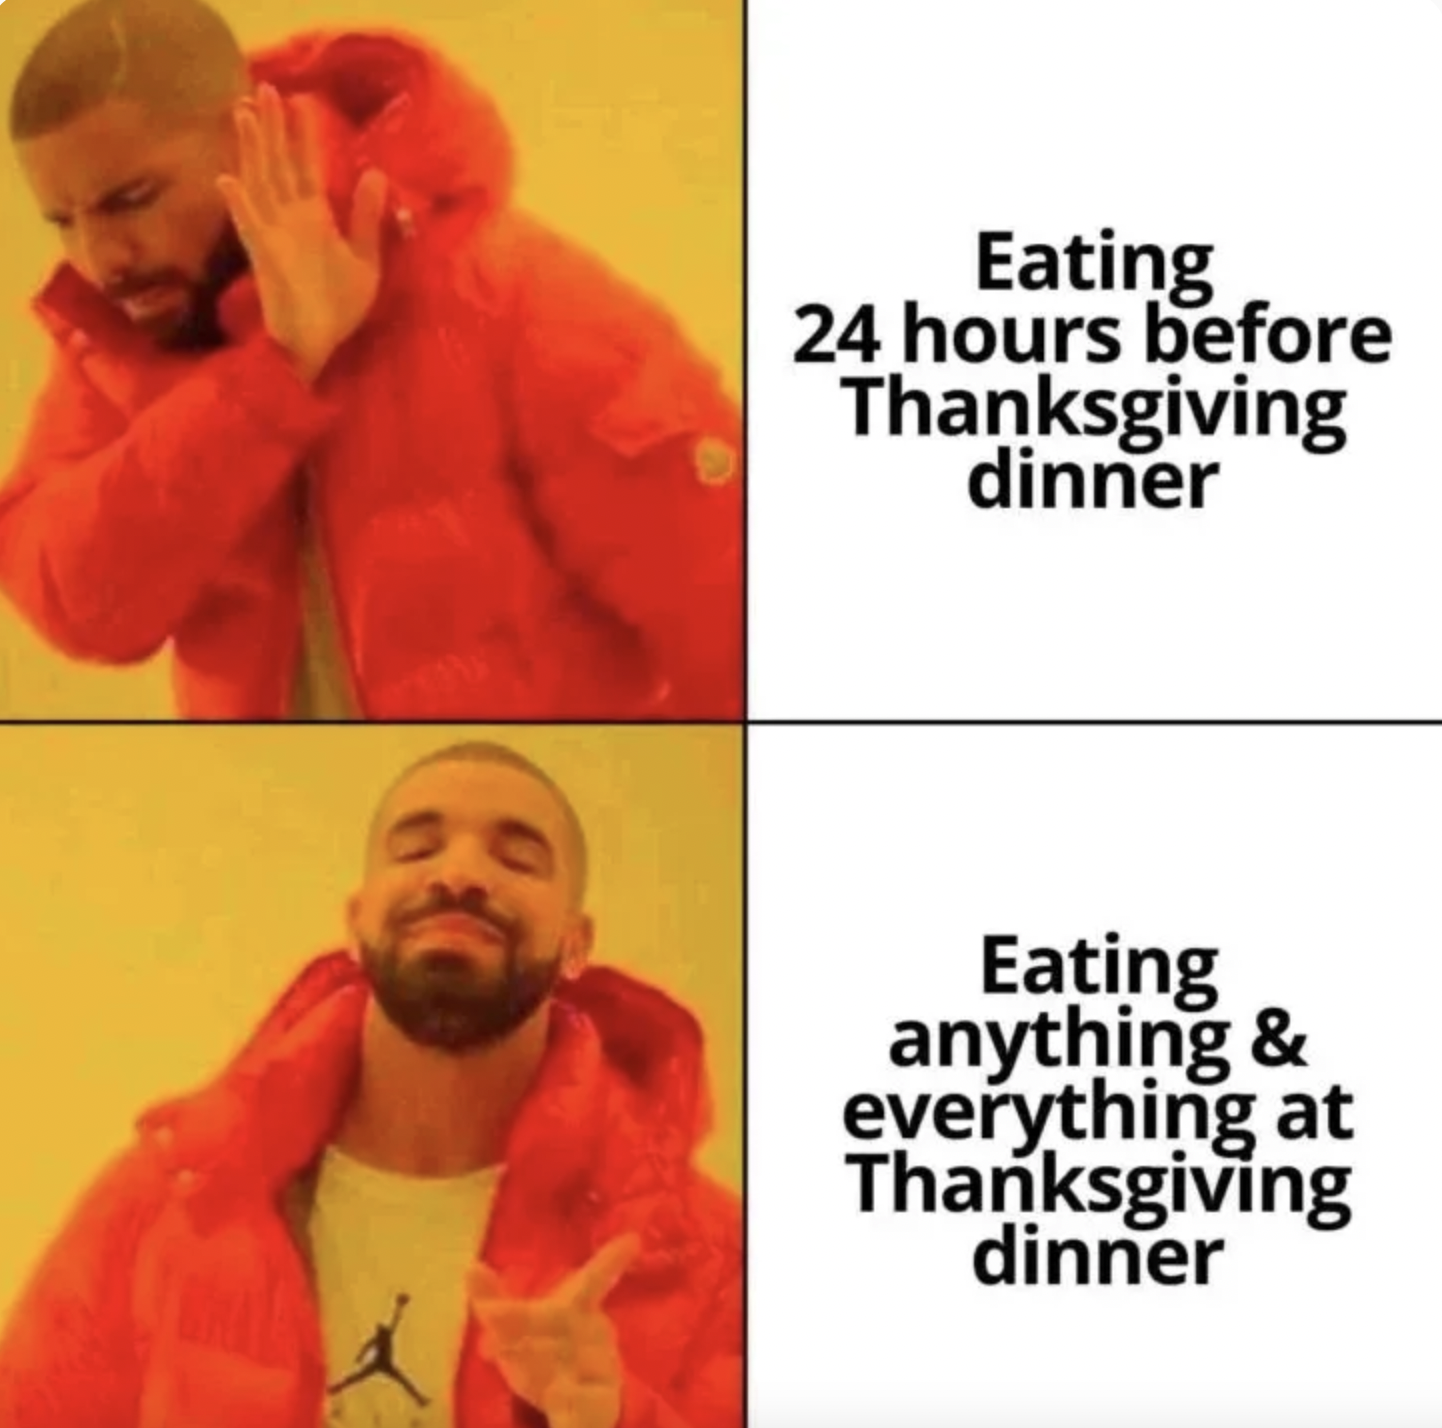 photo caption - Eating 24 hours before Thanksgiving dinner Eating anything & everything at Thanksgiving dinner